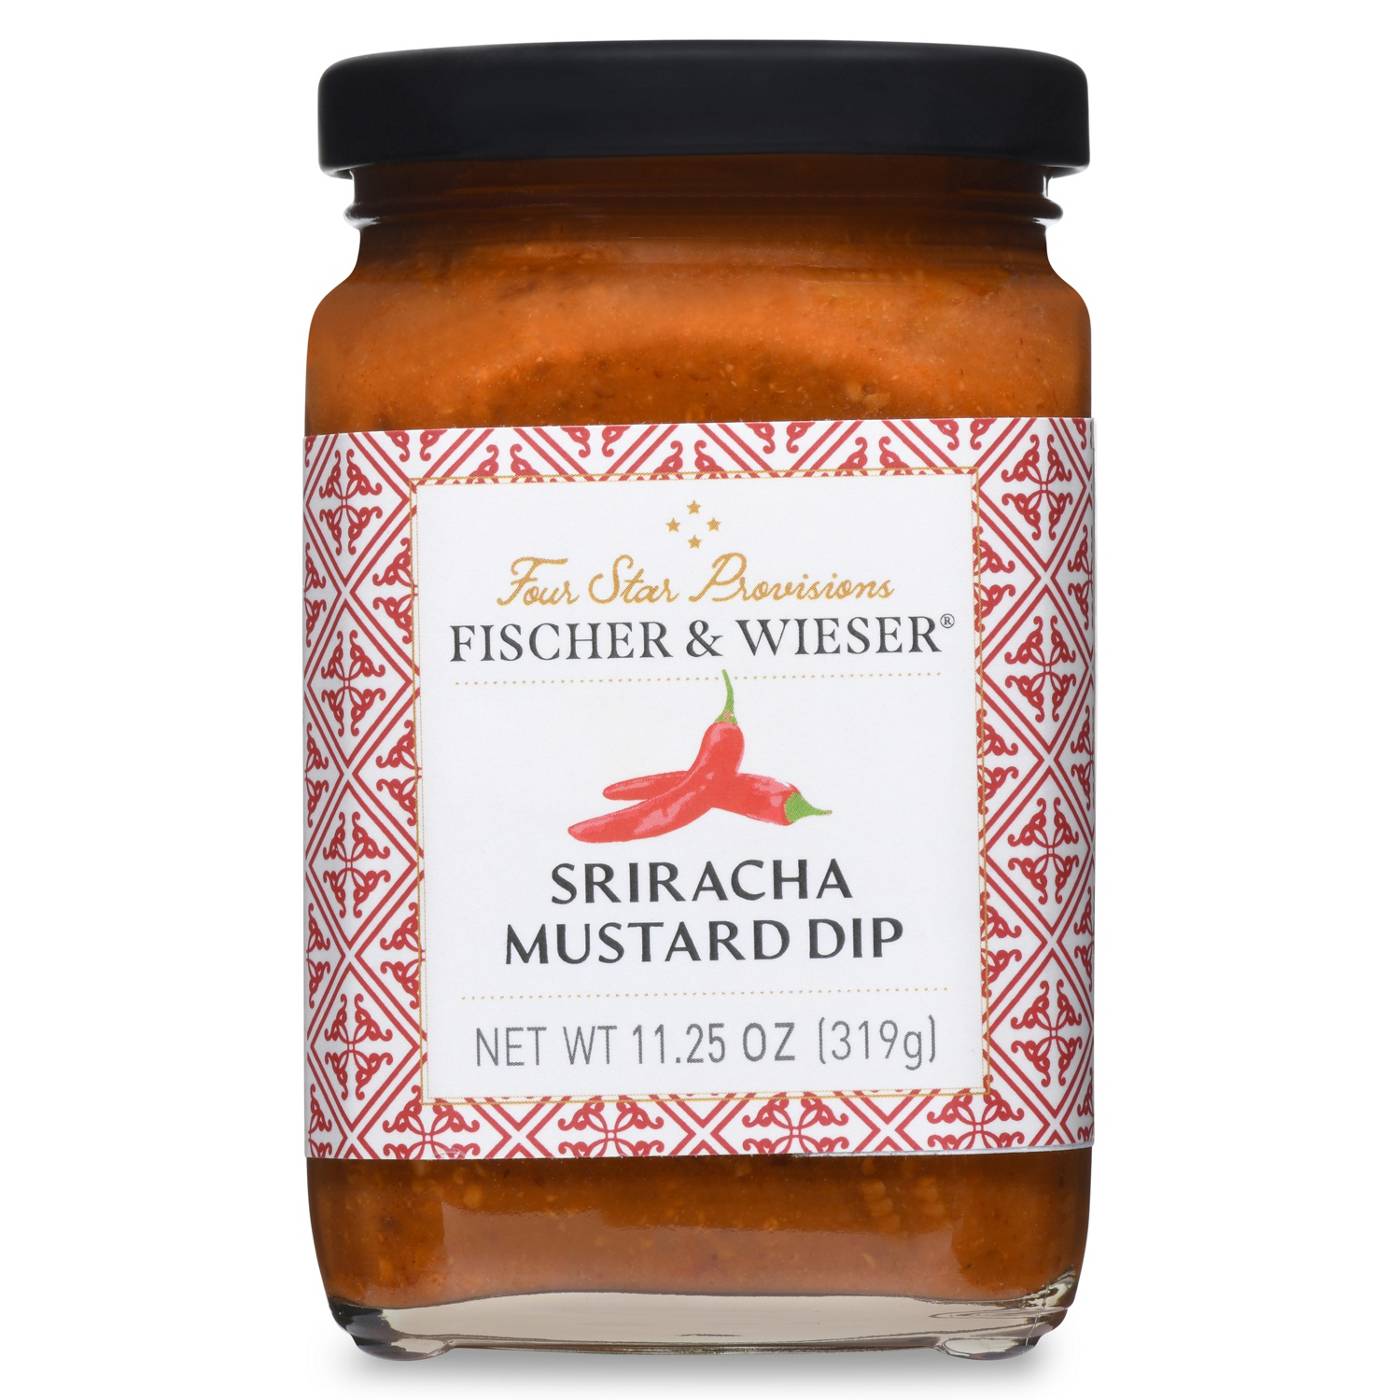 Fischer & Wieser Four Star Provisions Sriracha Mustard Dip; image 1 of 3